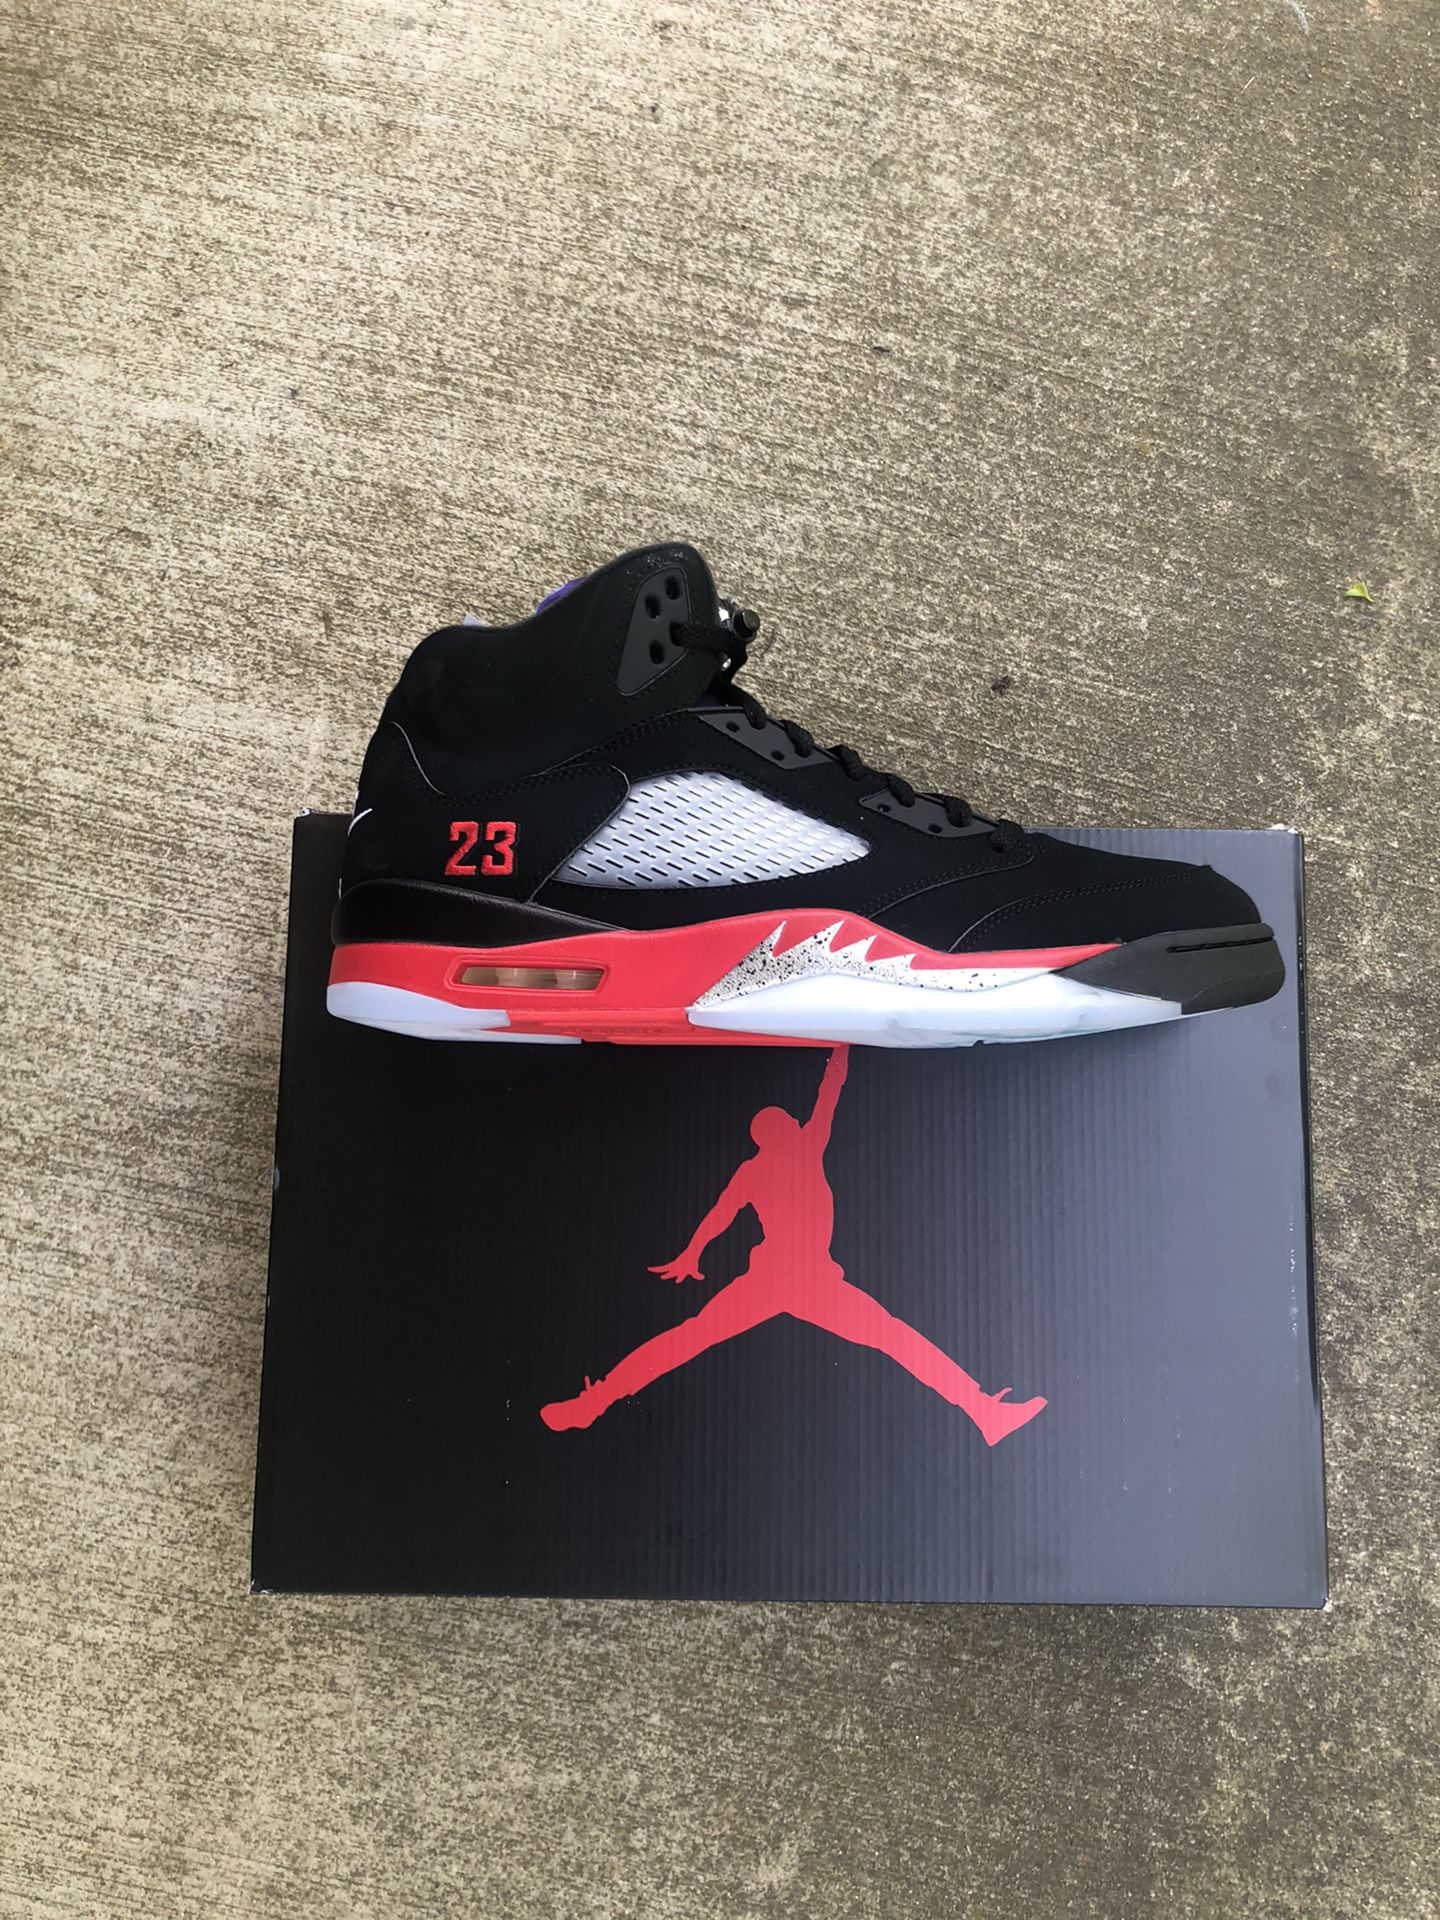 Jordan 5 top 3 retro Nike sz 12 13